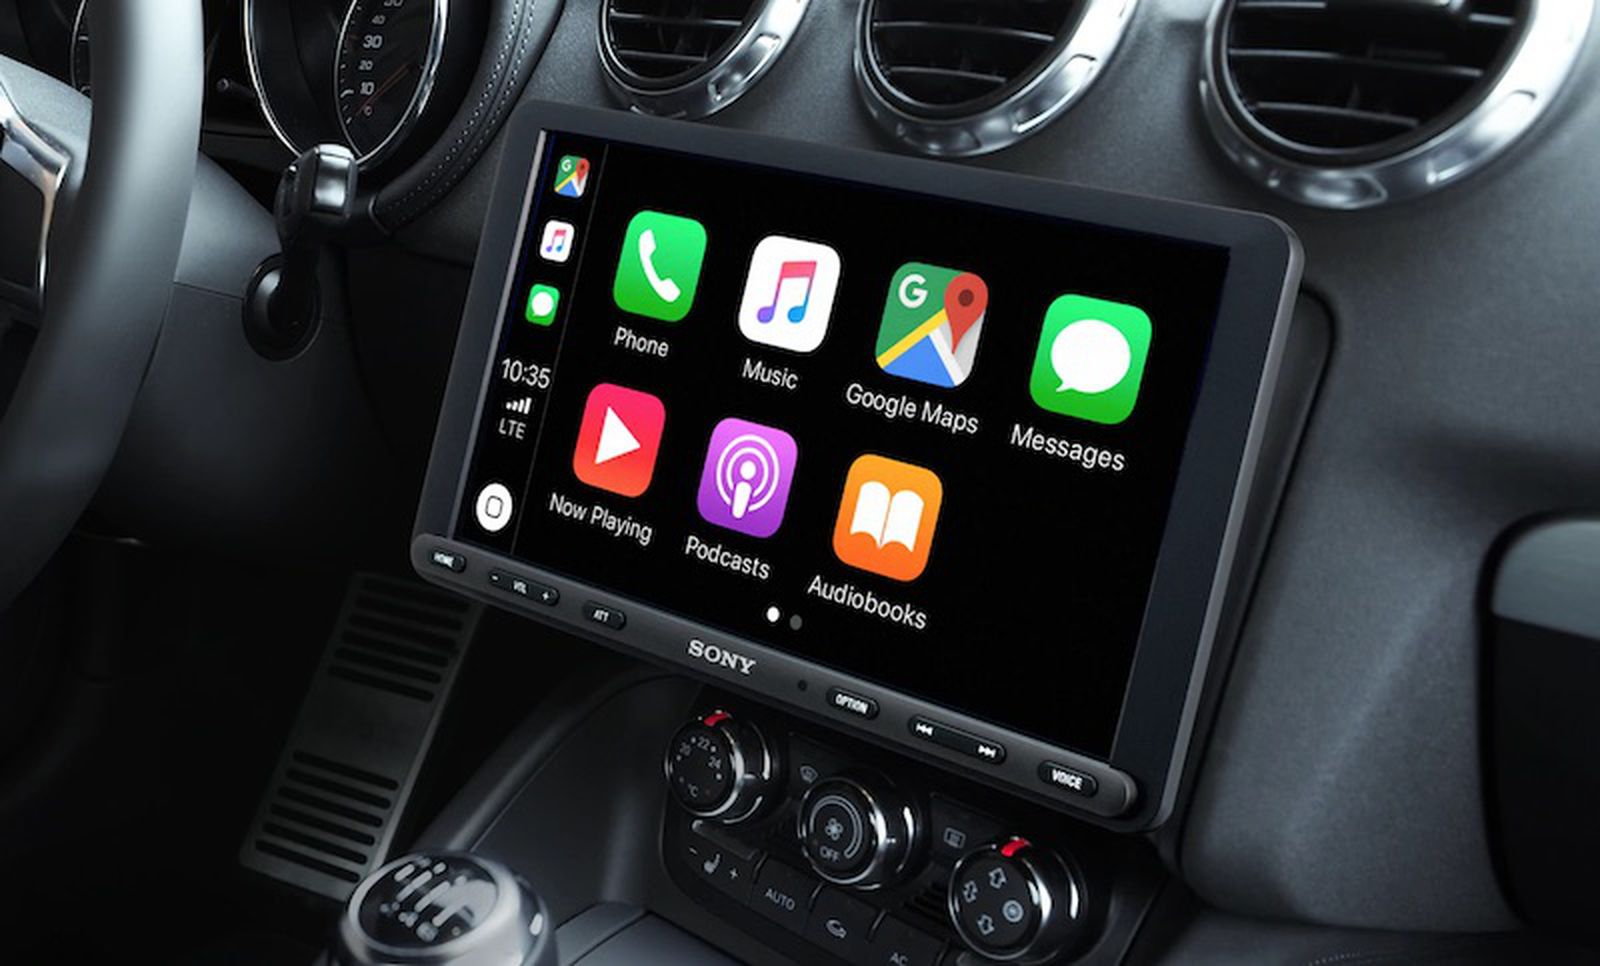 Apple CarPlay Receivers at